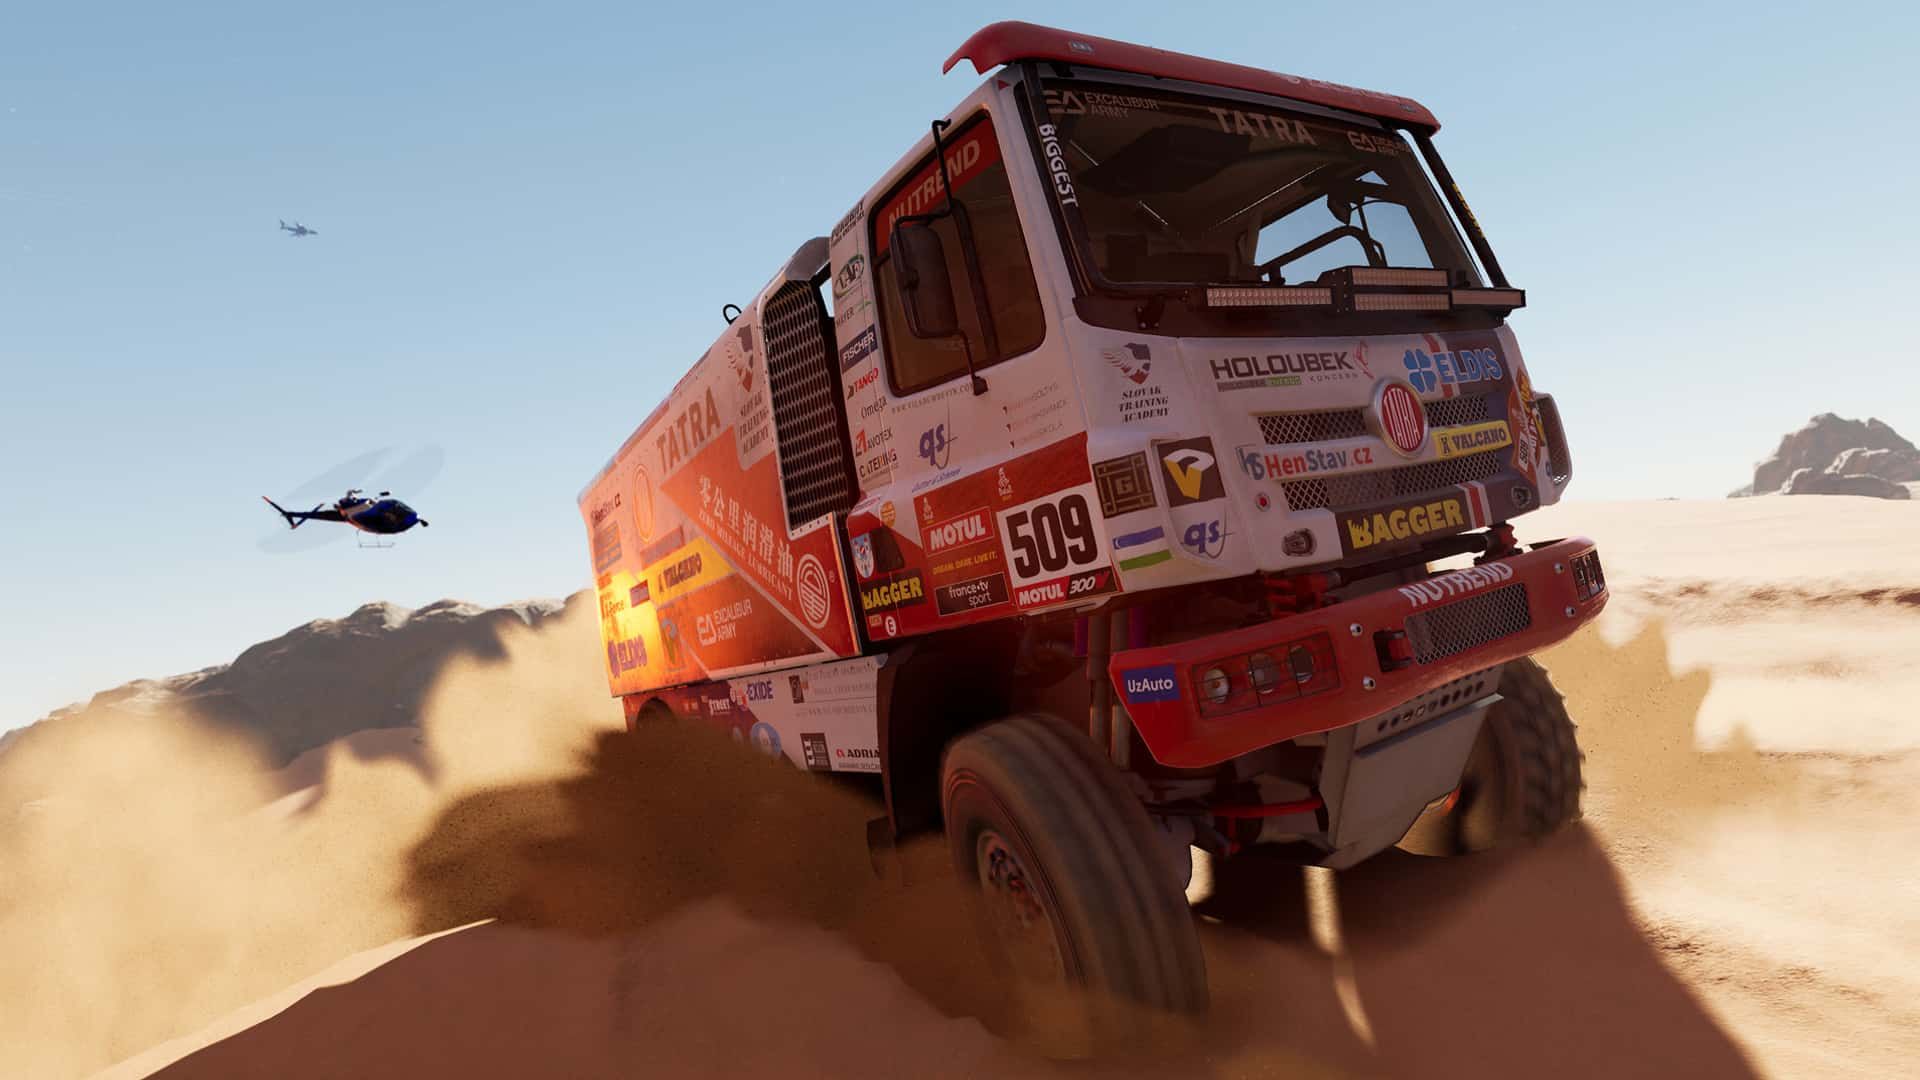 Dakar Desert Rally truck